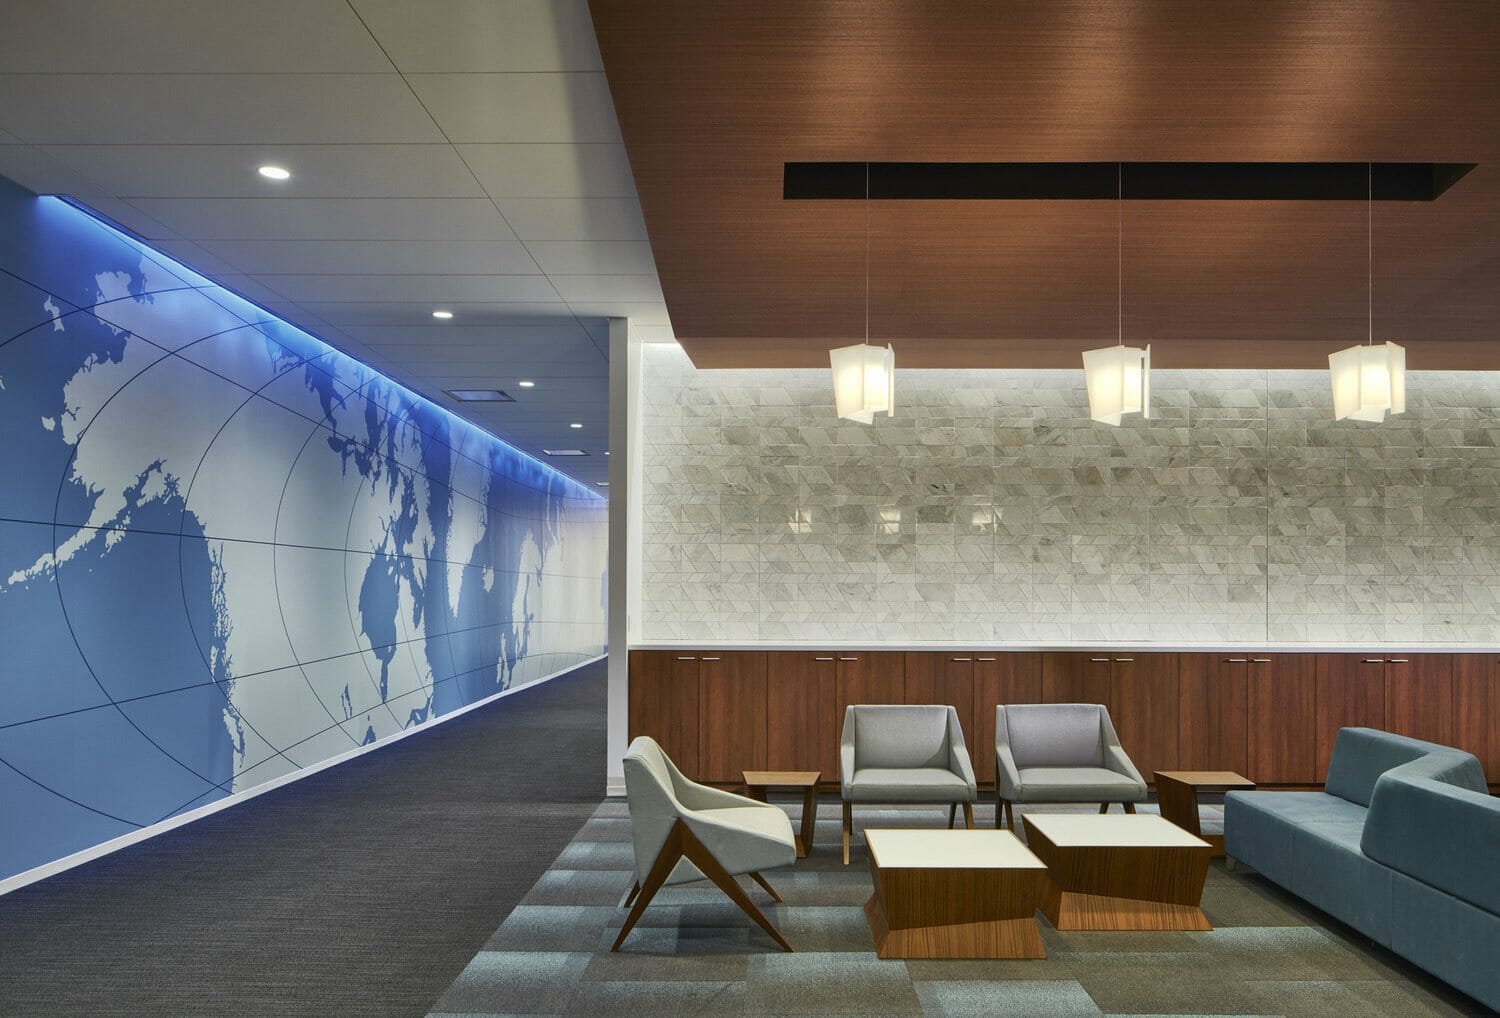 Office Interior Design Services: 10 Best in 2023 - Decorilla